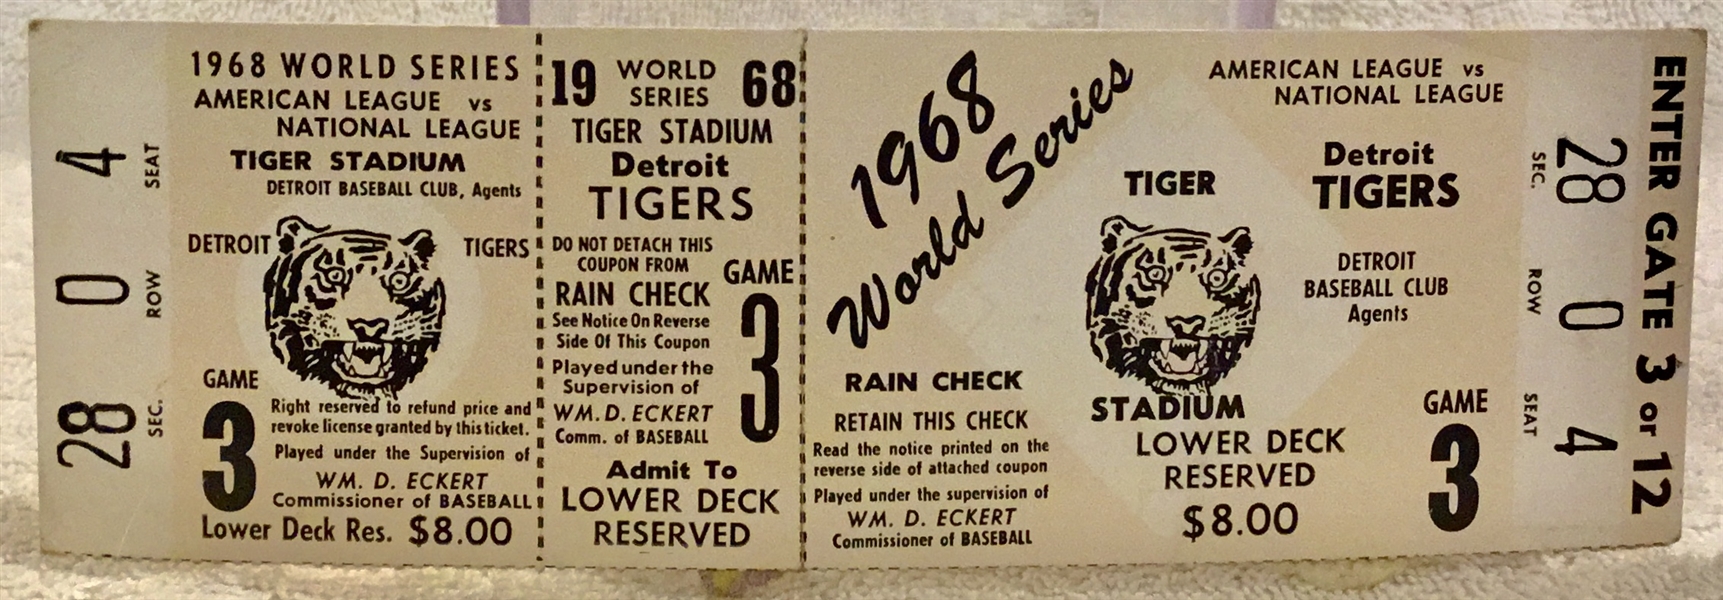 1968 WORLD SERIES FULL TICKET @ TIGER STADIUM - CARDINALS vs TIGERS